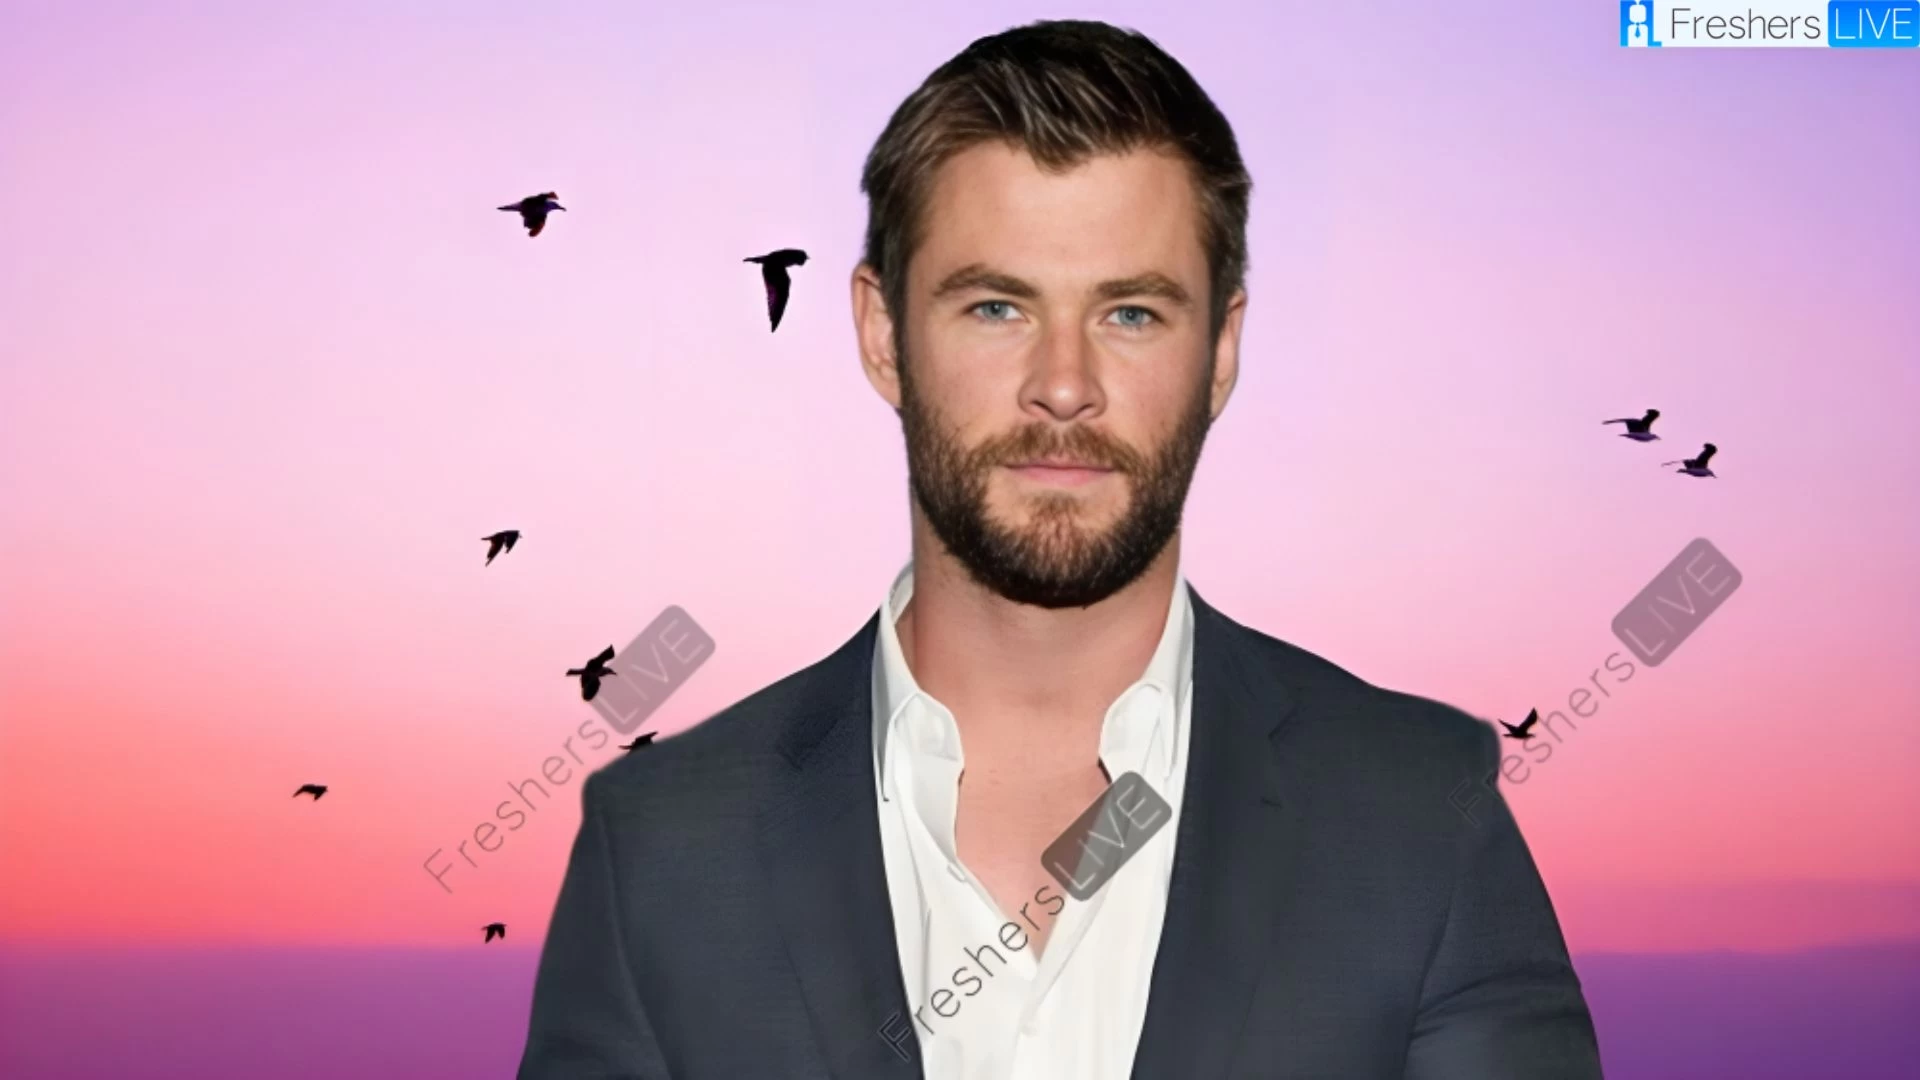 Etnia de Chris Hemsworth, ¿Cuál es la etnia de Chris Hemsworth?